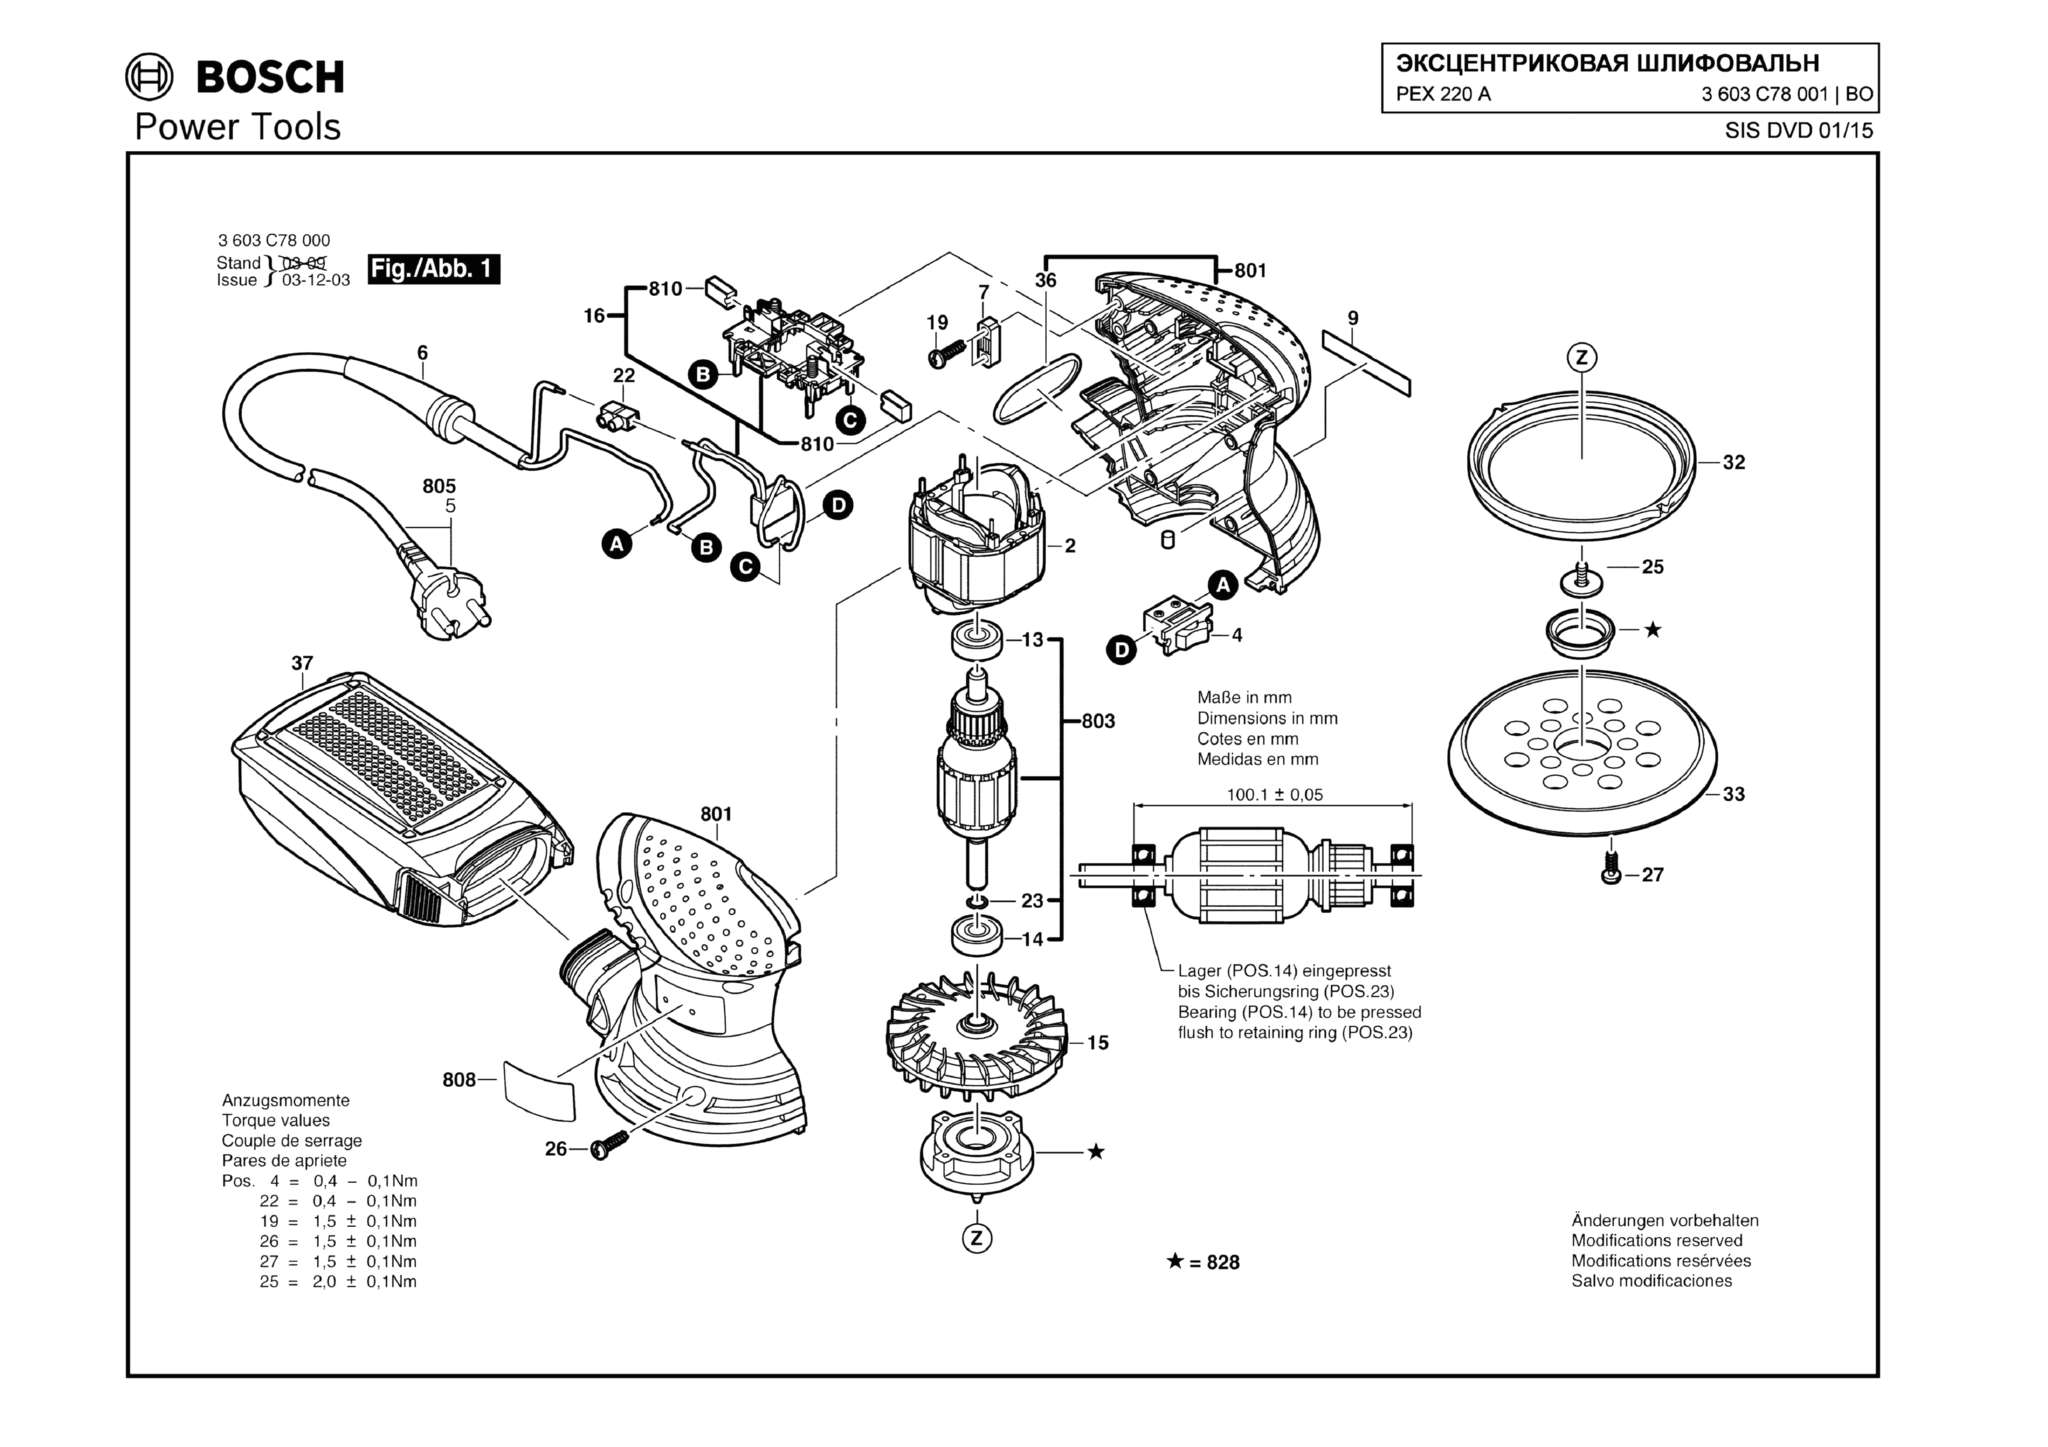 Запчасти, схема и деталировка Bosch PEX 220 A (ТИП 3603C78001)